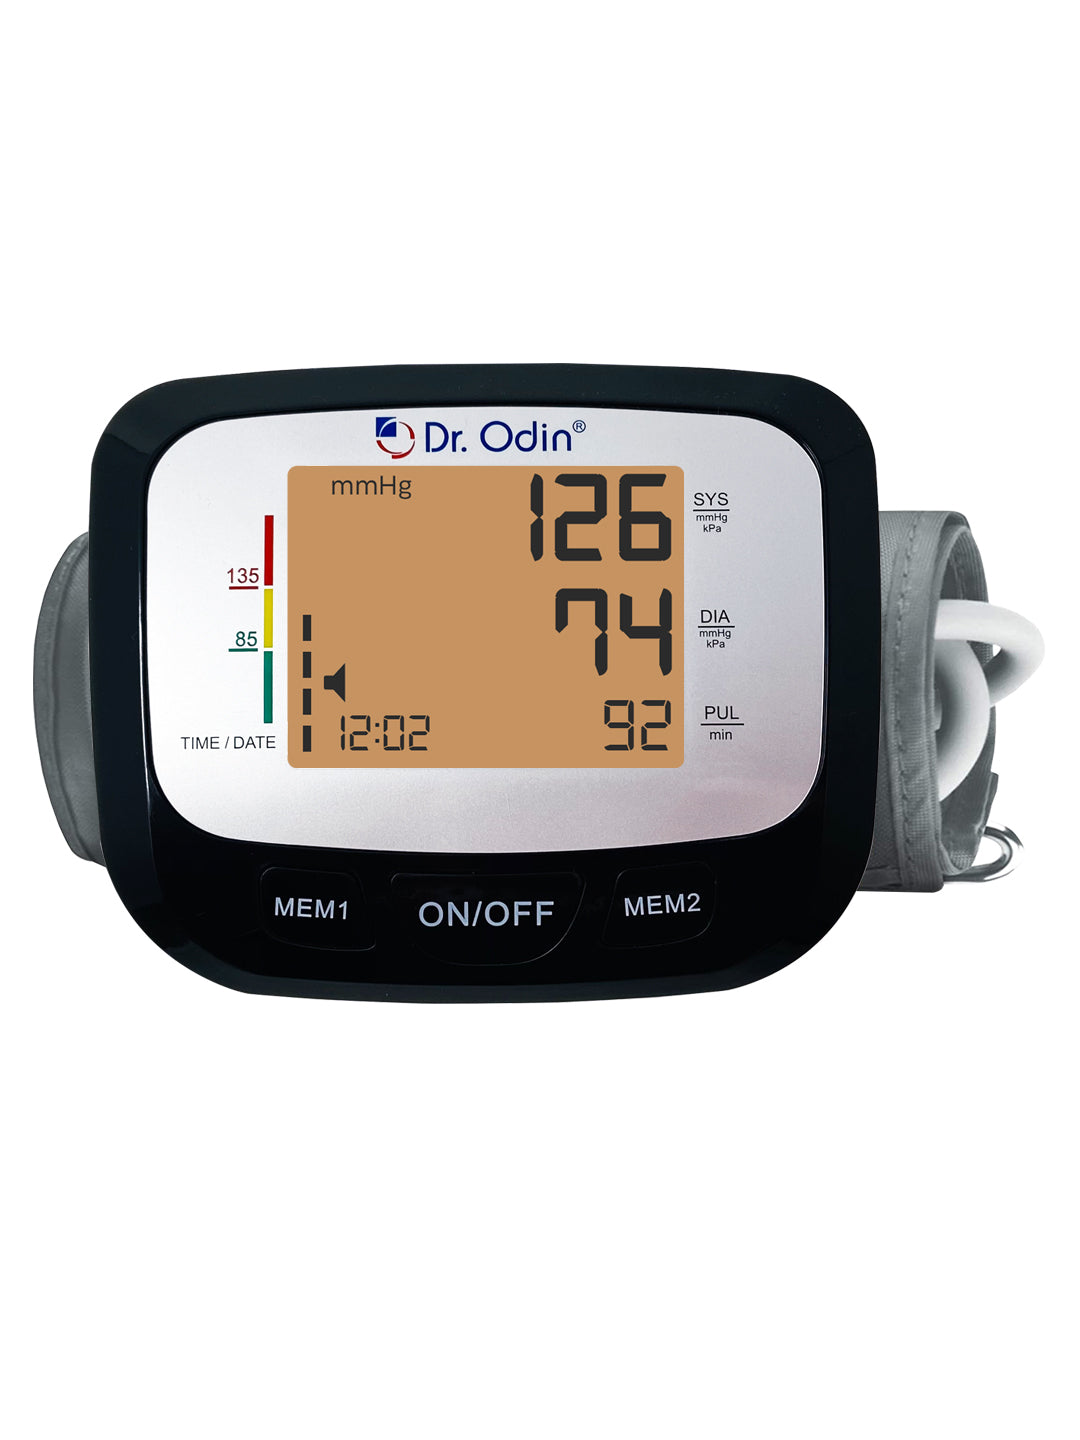 Blood Pressure Monitor OBP101 Black